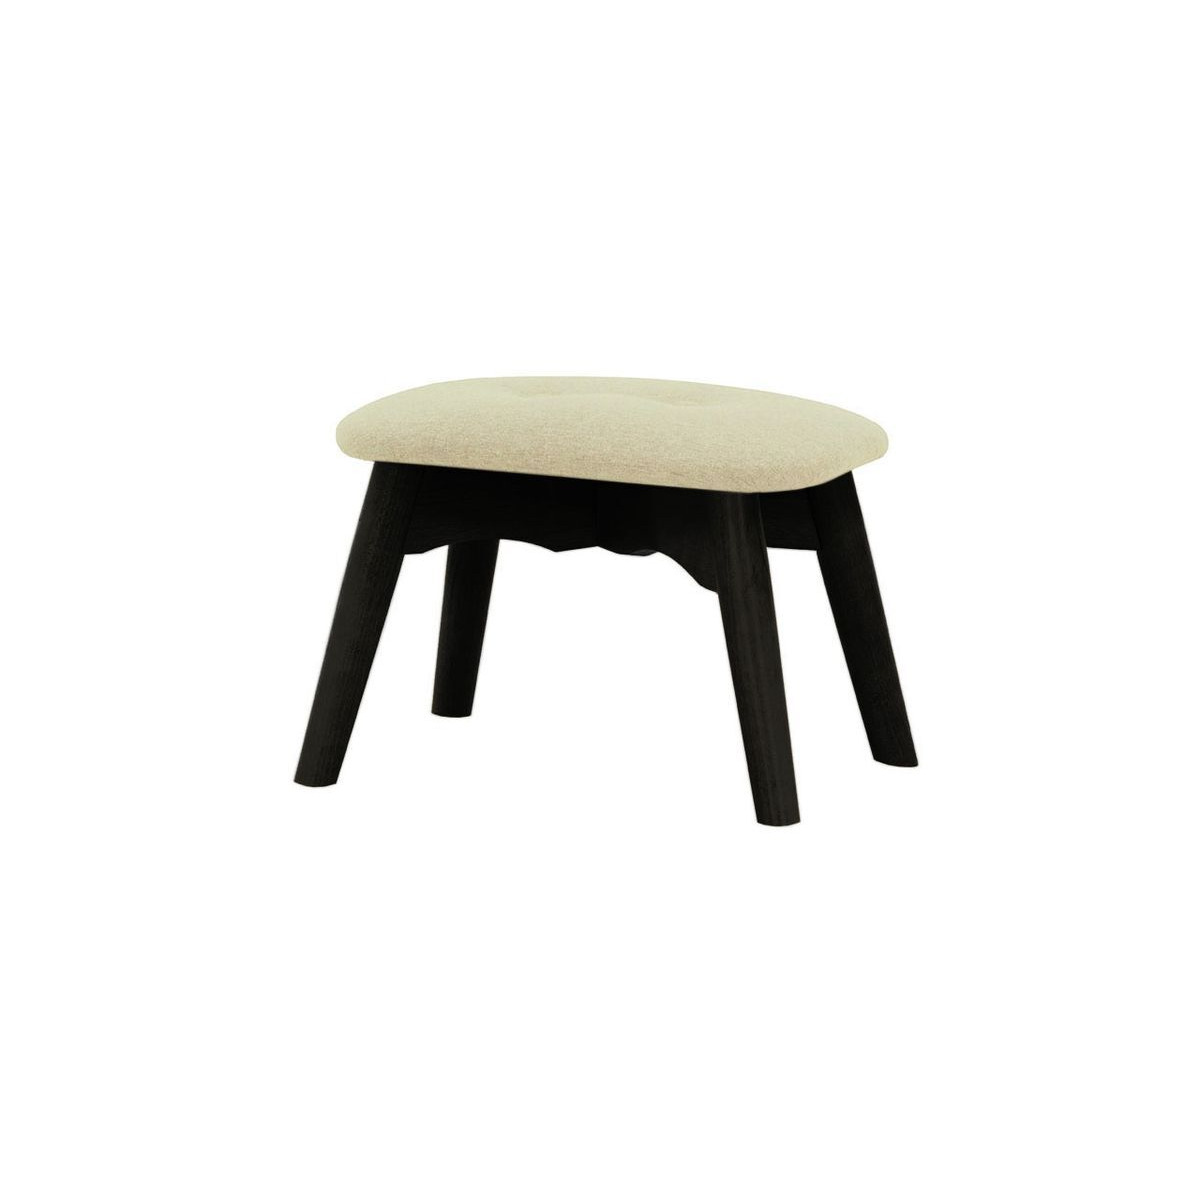 Ducon Mini Children's Footstool, cream, Leg colour: black - image 1